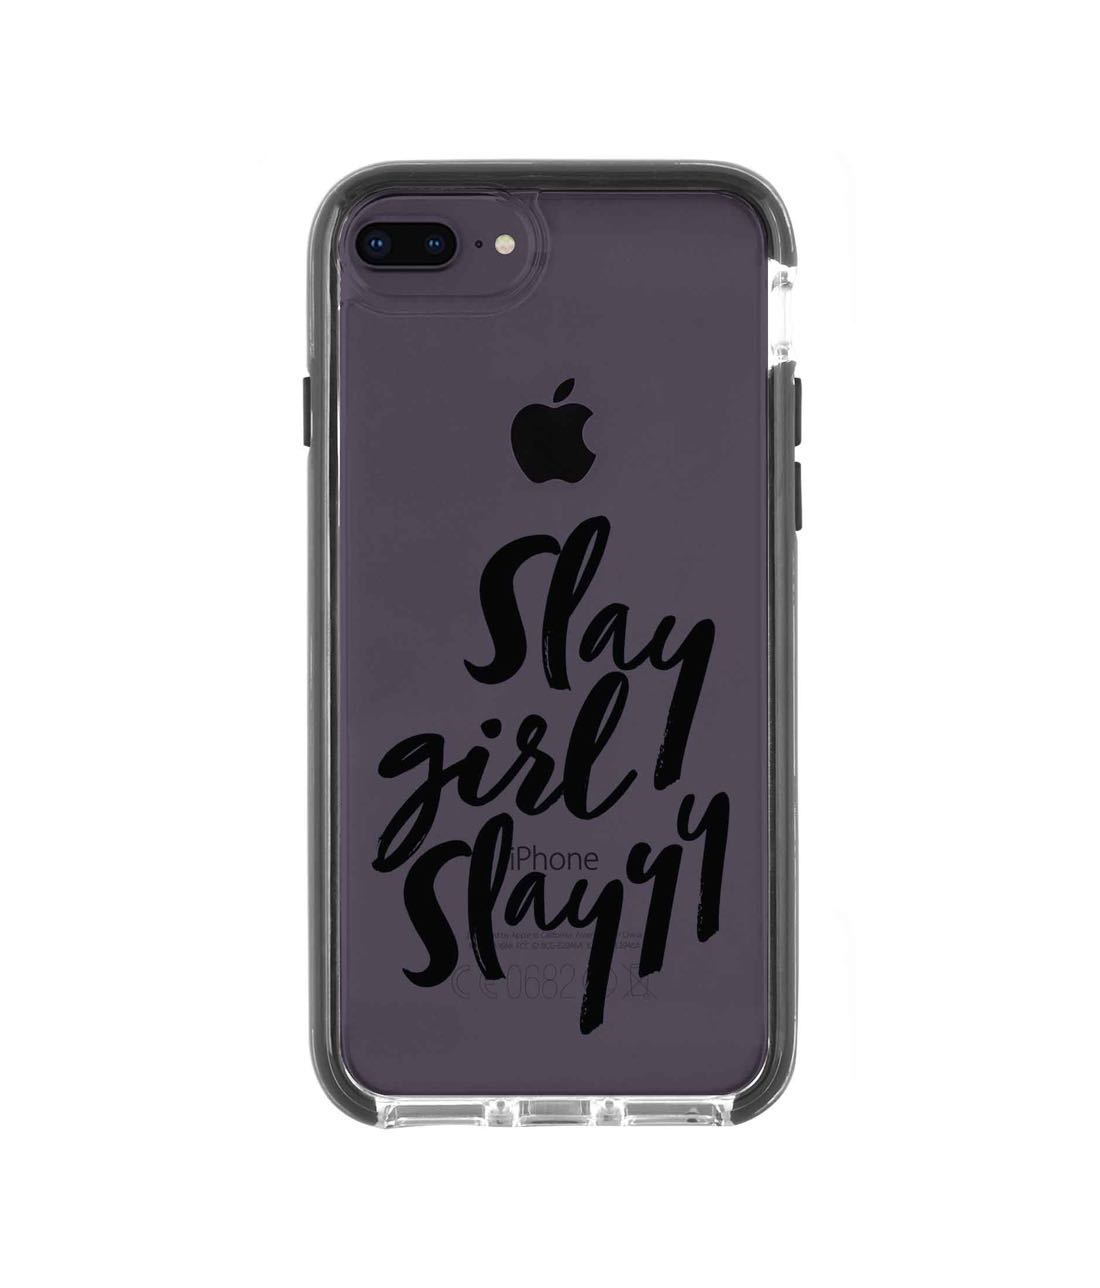 Slay girl Slay - Extreme Phone Case for iPhone 8 Plus